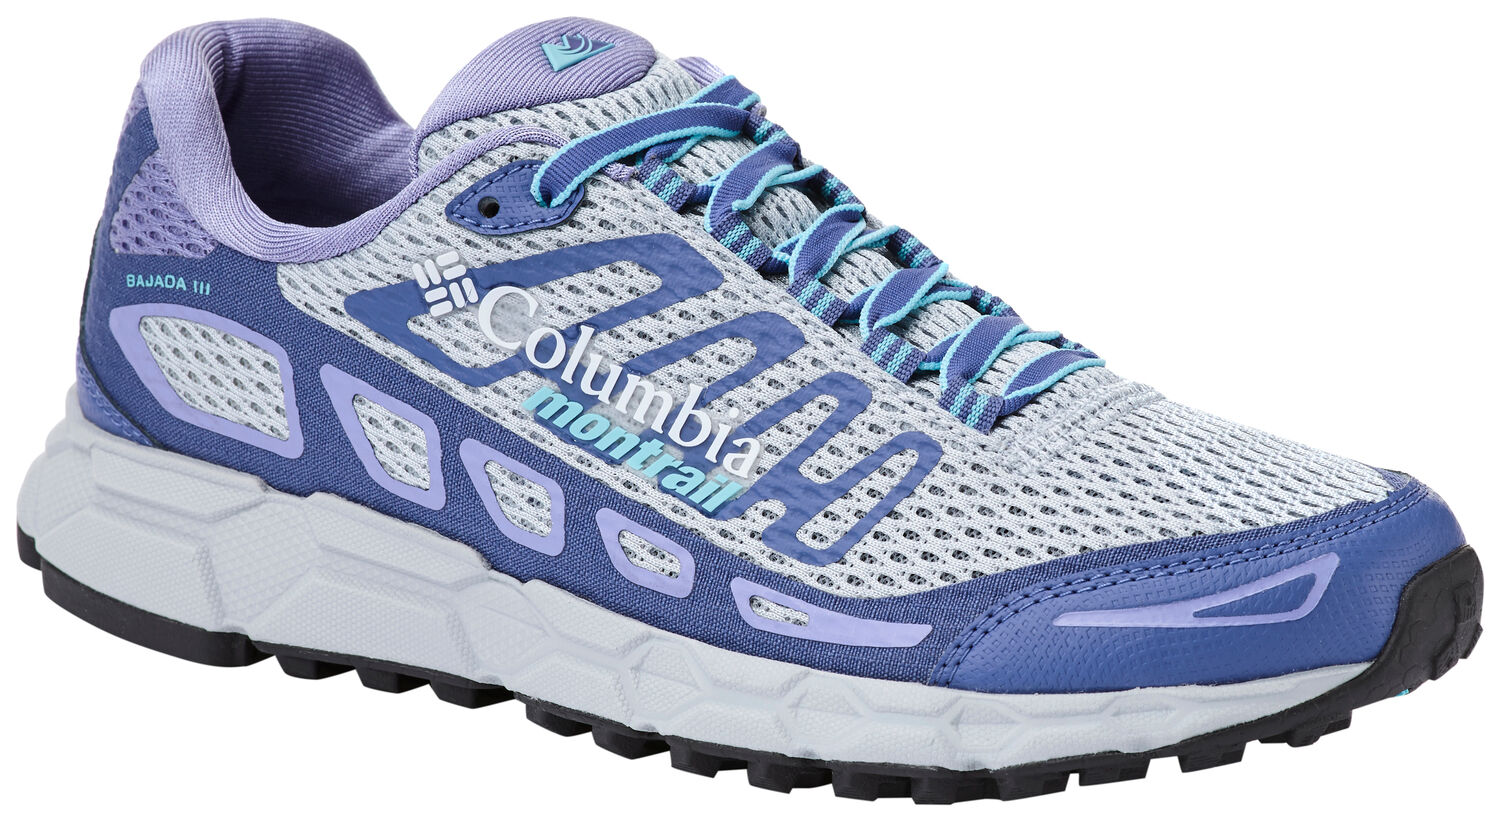 Columbia - Bajada 3 - Trail Running shoes - Women's